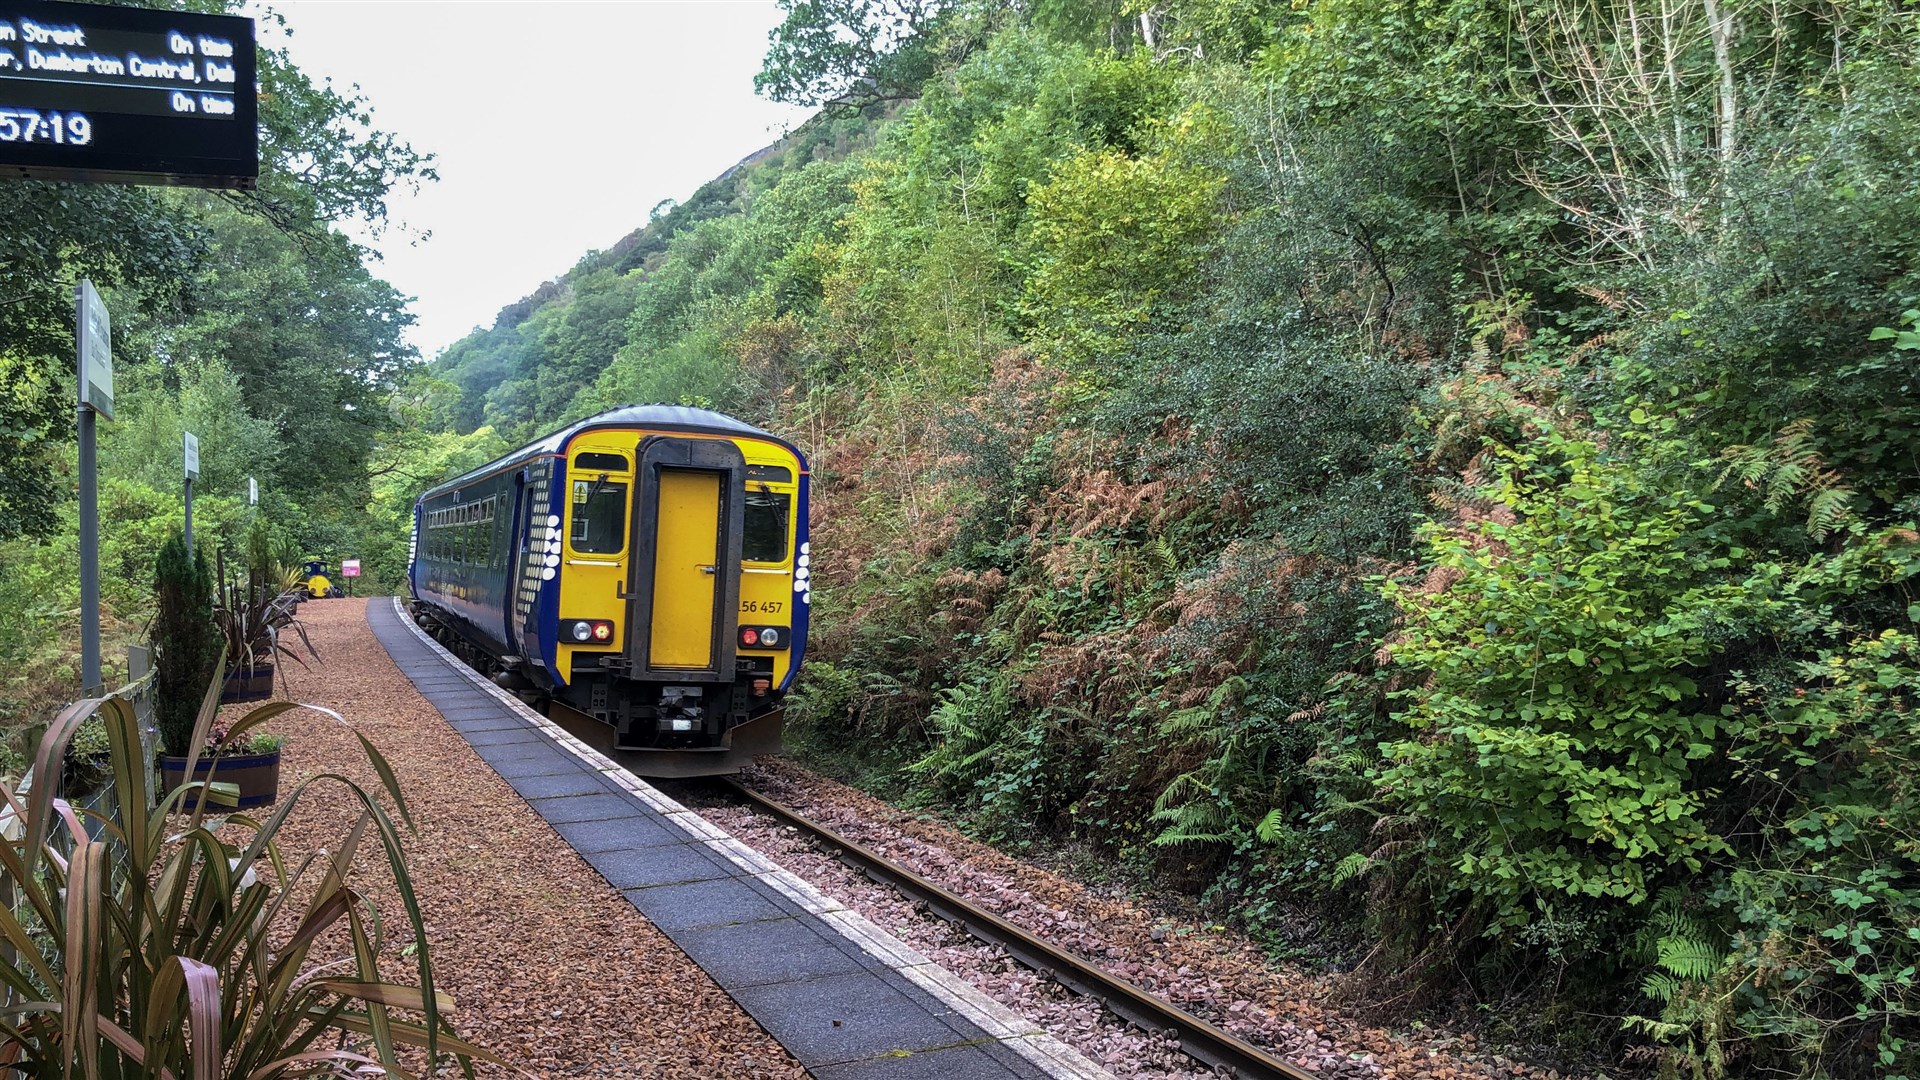 A class 156 train on Scotland's west coast